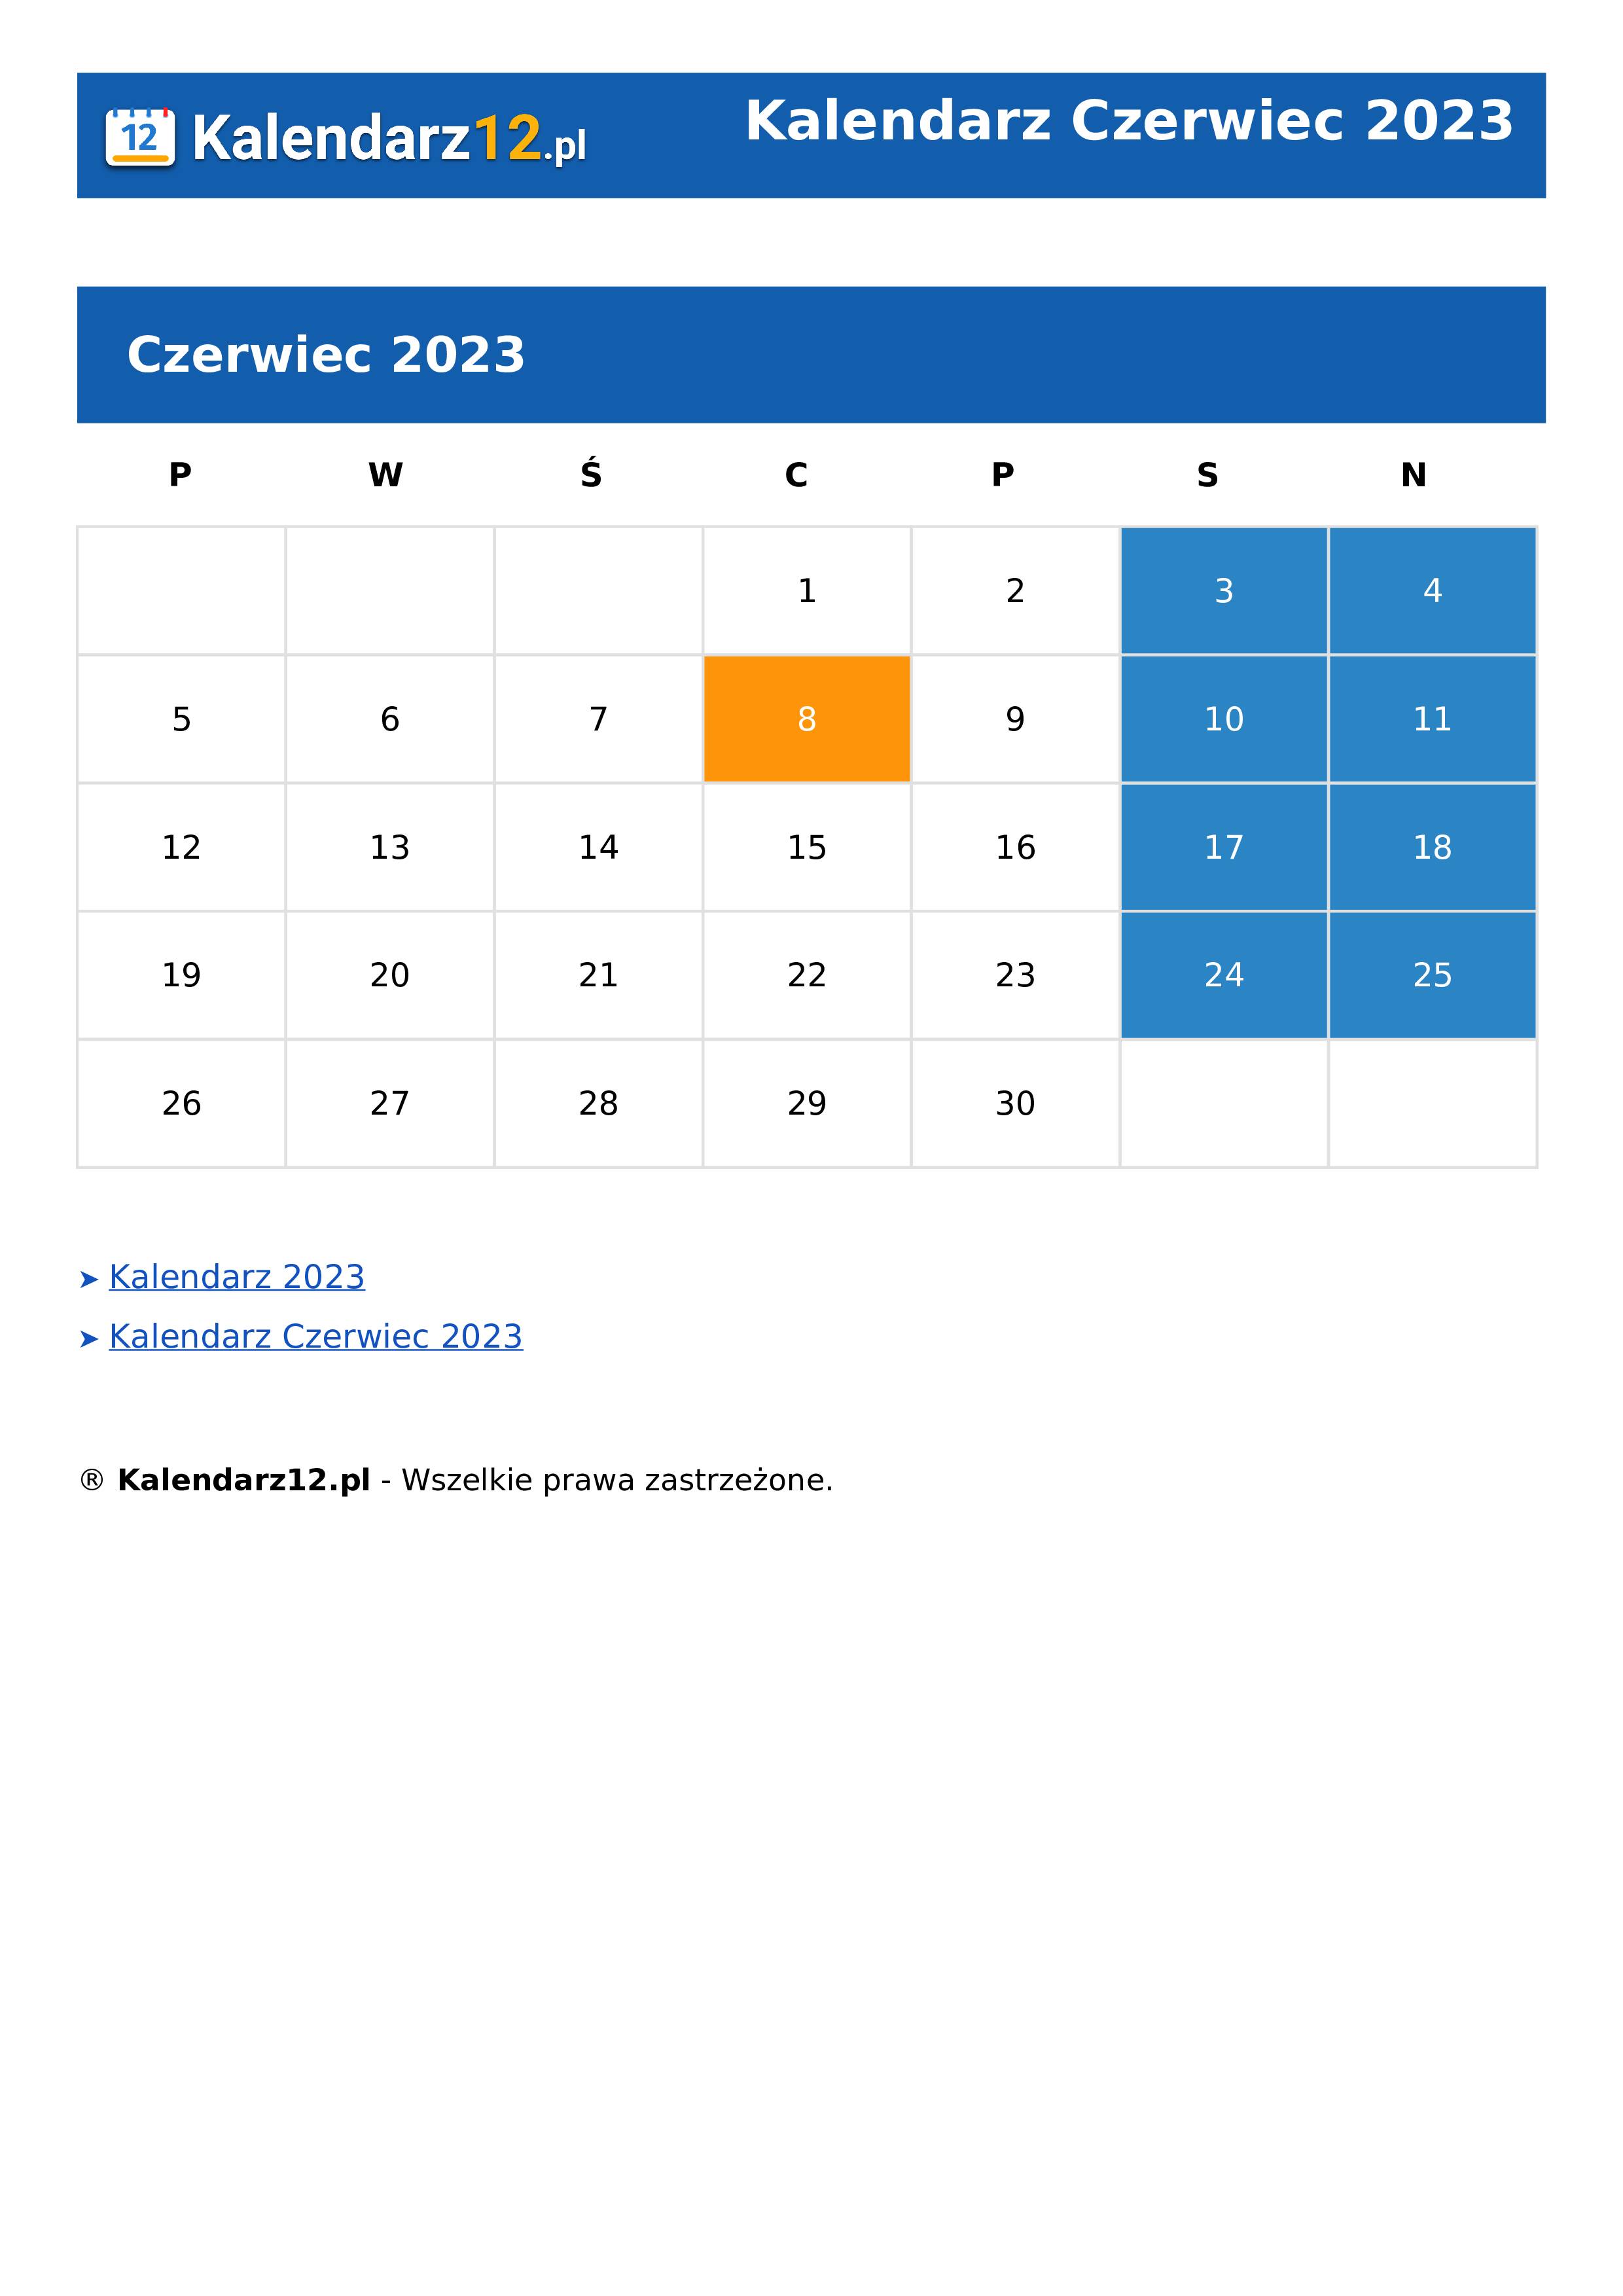 Calendar Czerwiec 2023